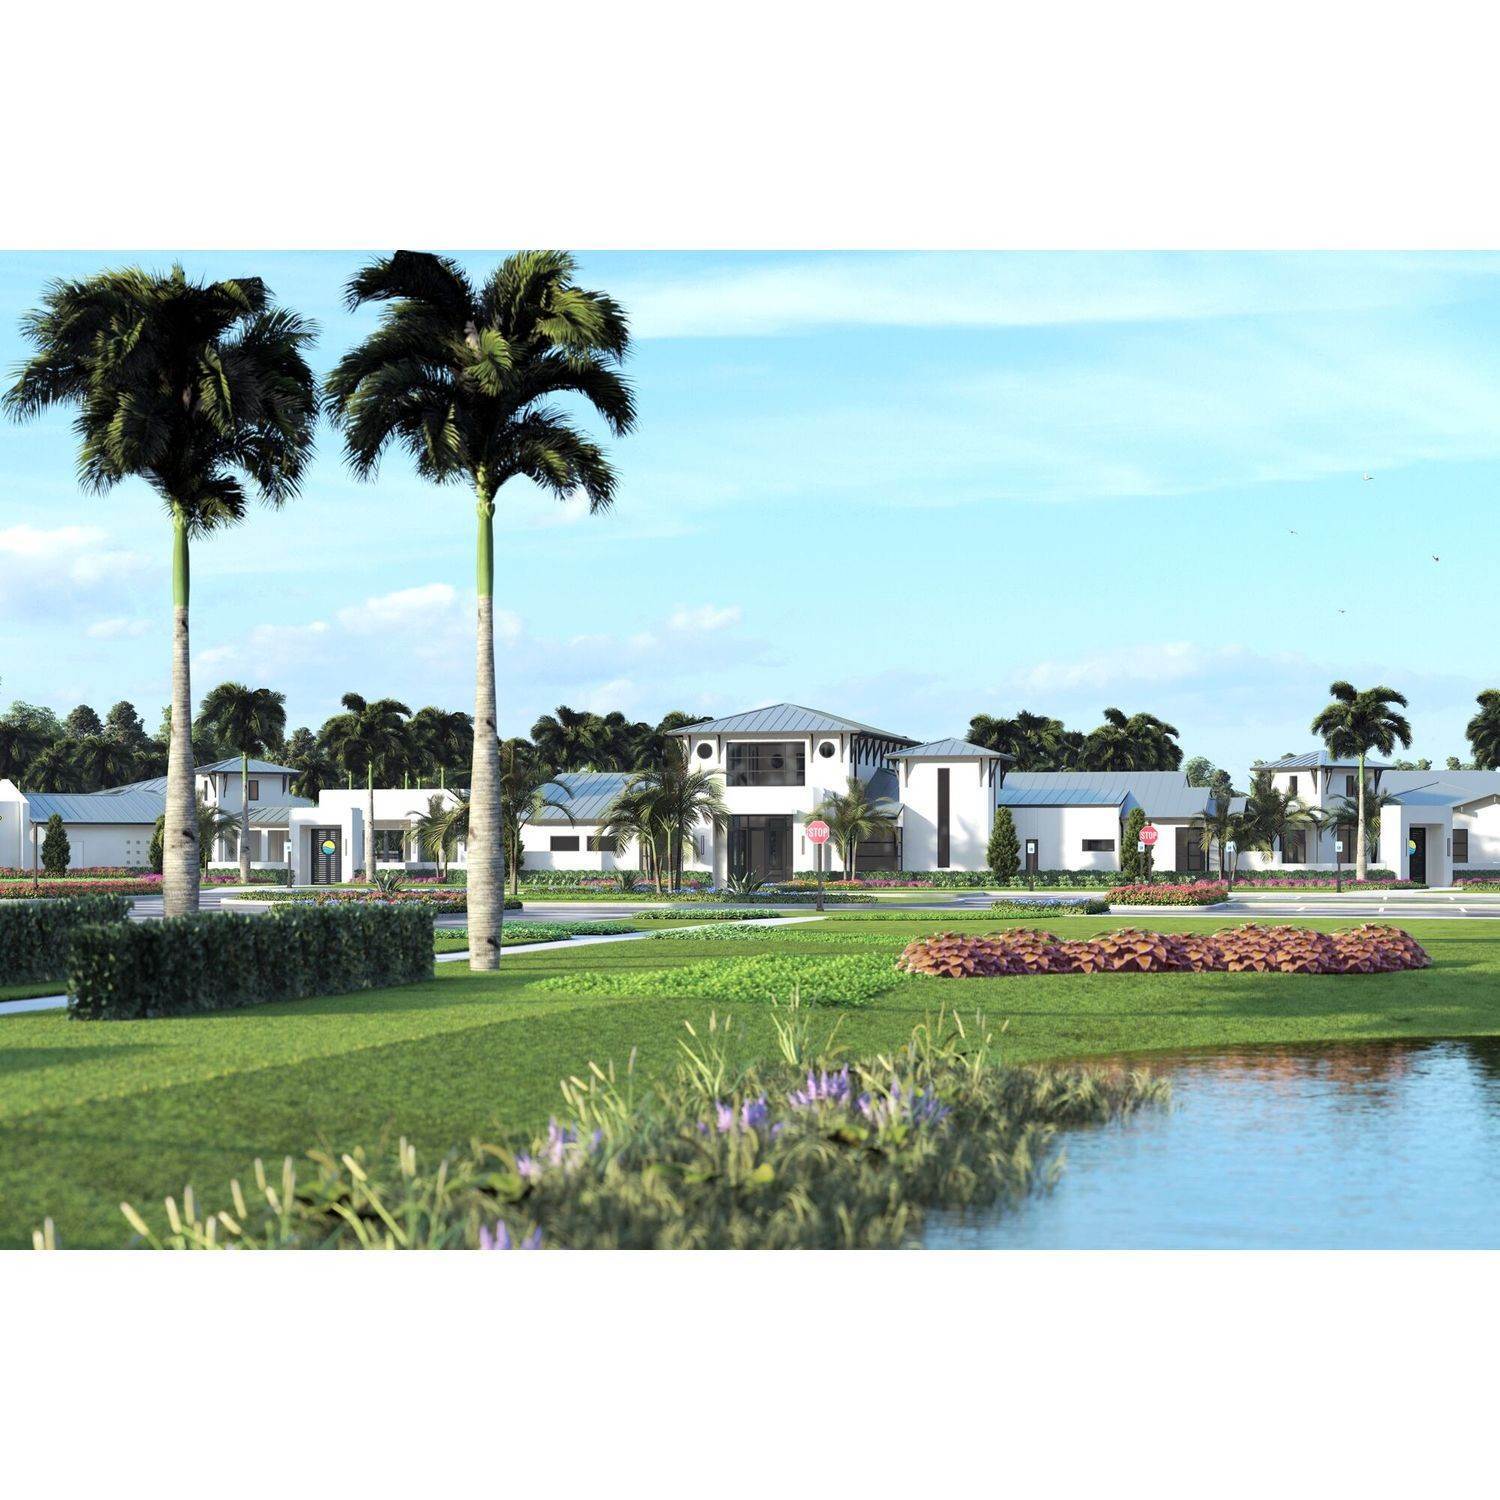 6. Wellen Park - Brightmore xây dựng tại 11410 Myakka Blue Dr, Venice, FL 34293